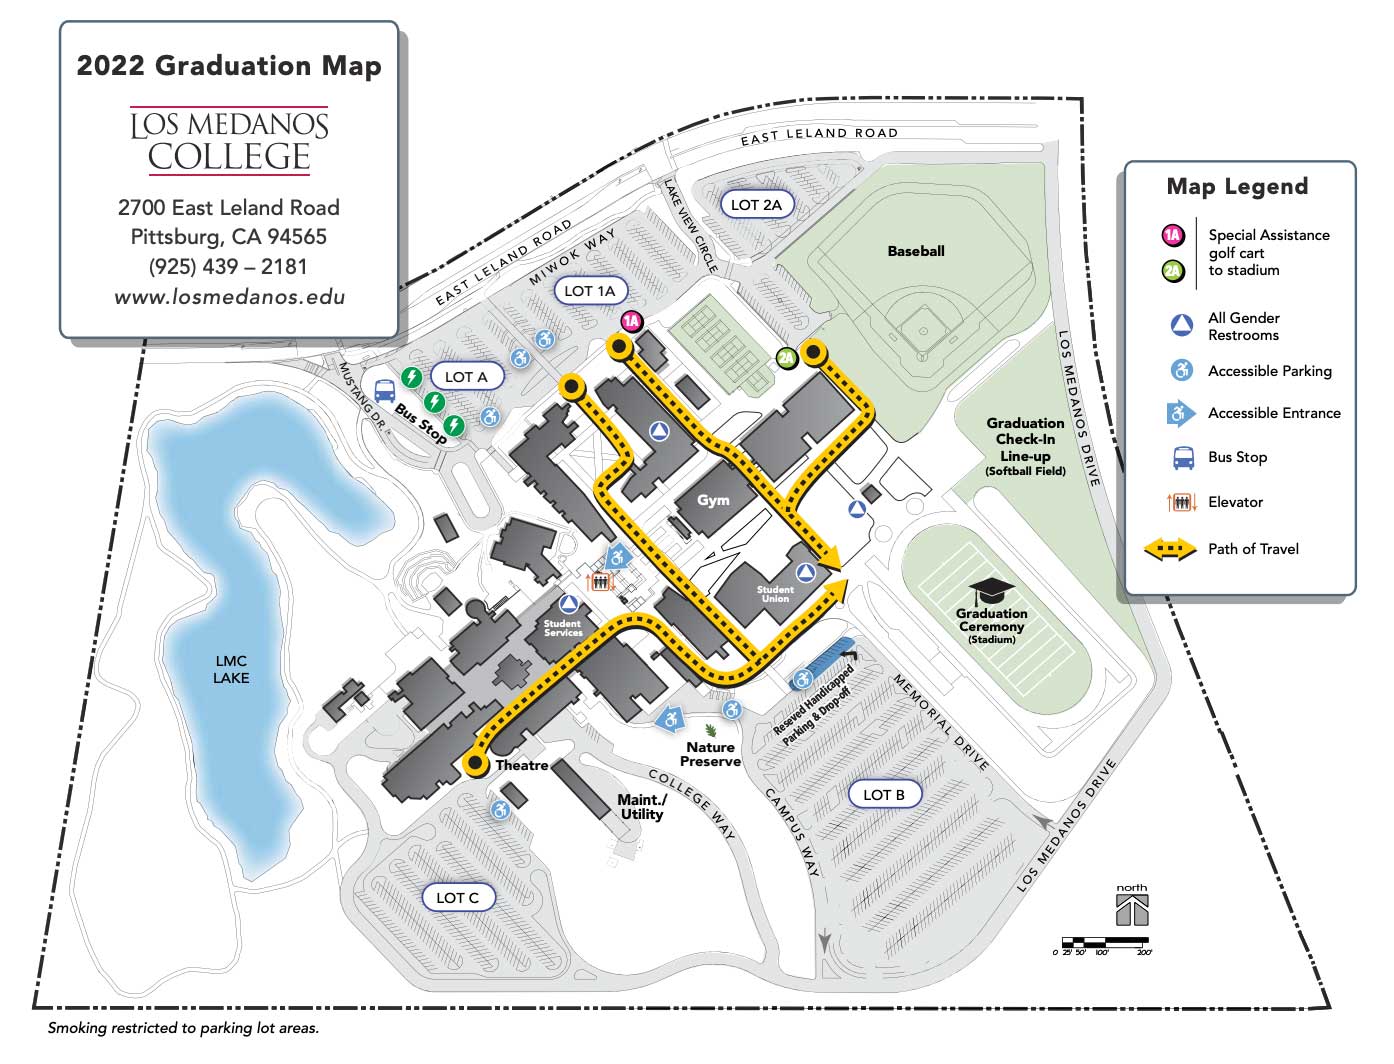 Graduation access map